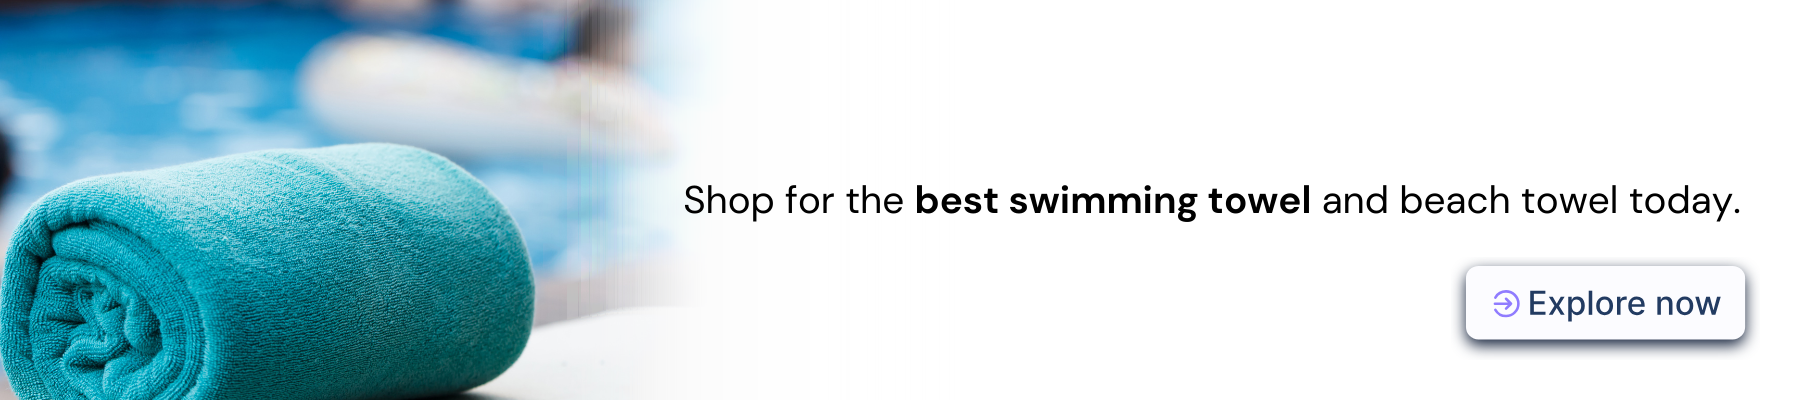 buy swimming towel online in Australia